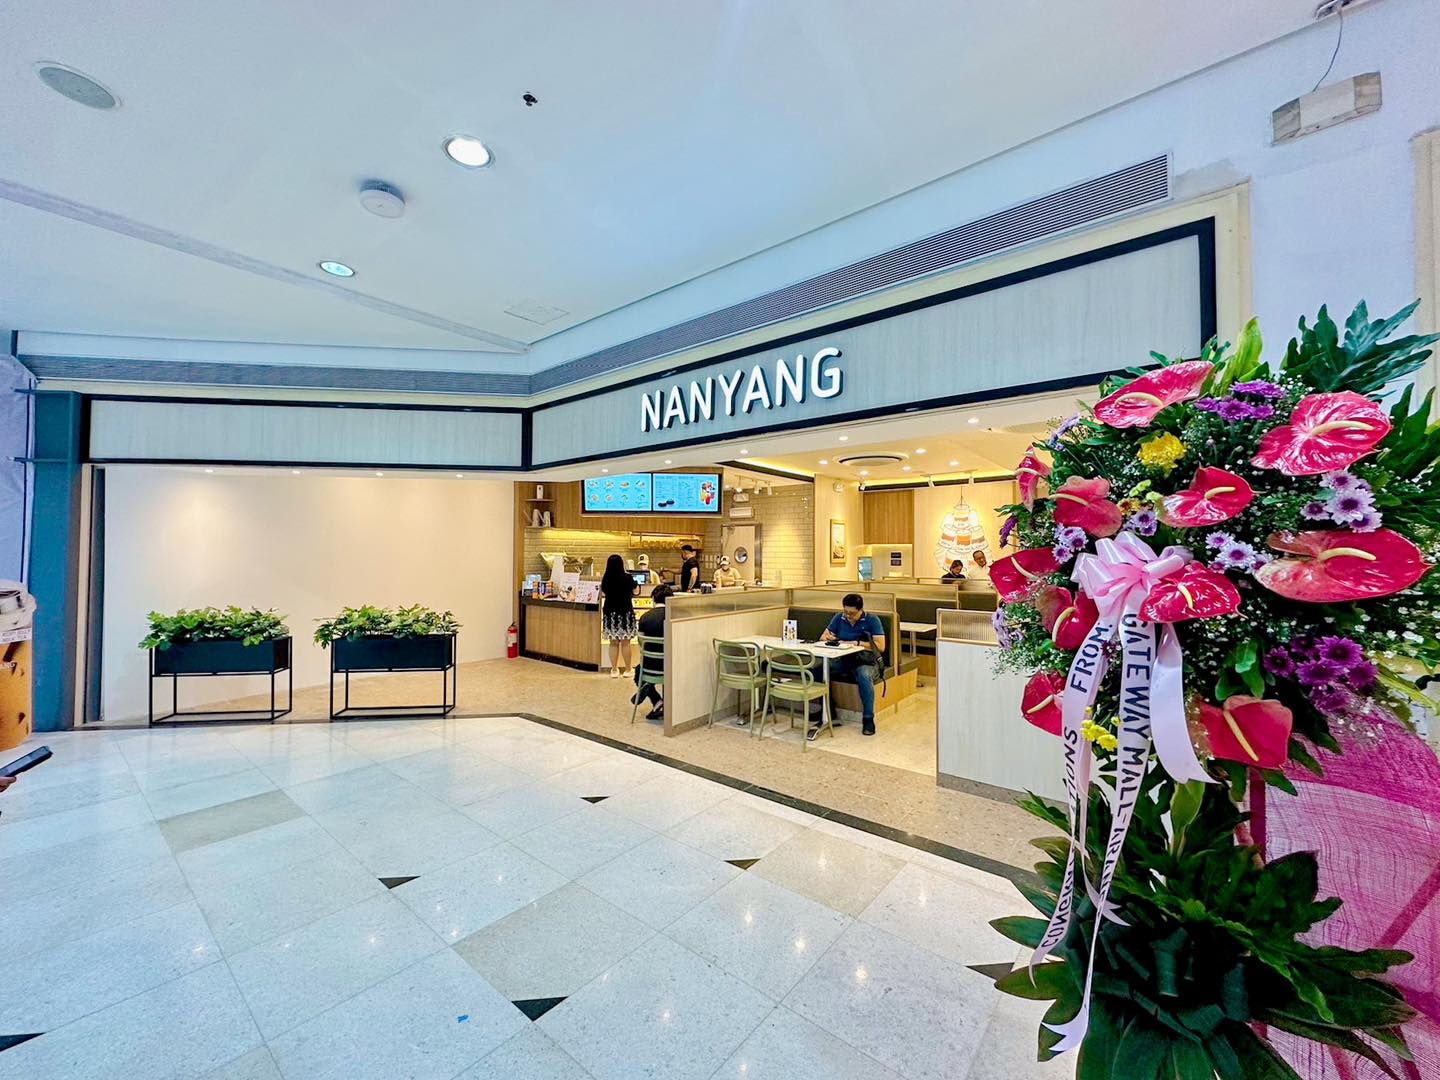 Nanyang brings Singaporean flavors to Gateway Mall